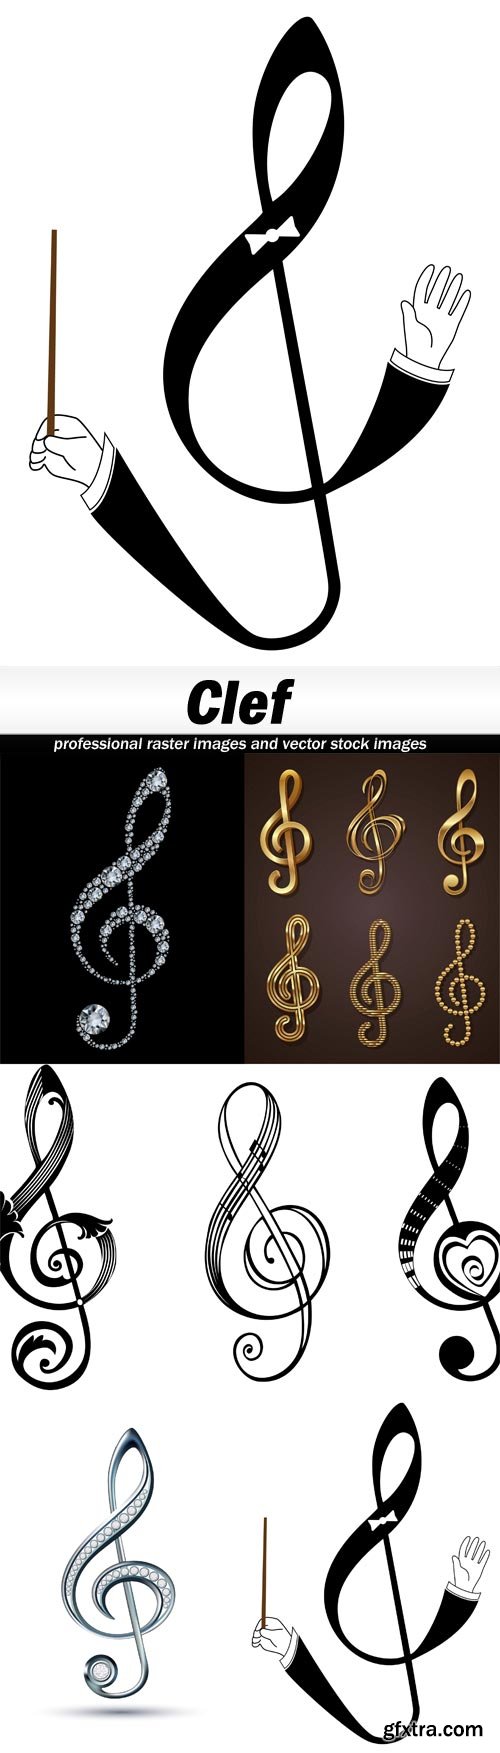 Clef - 5 EPS